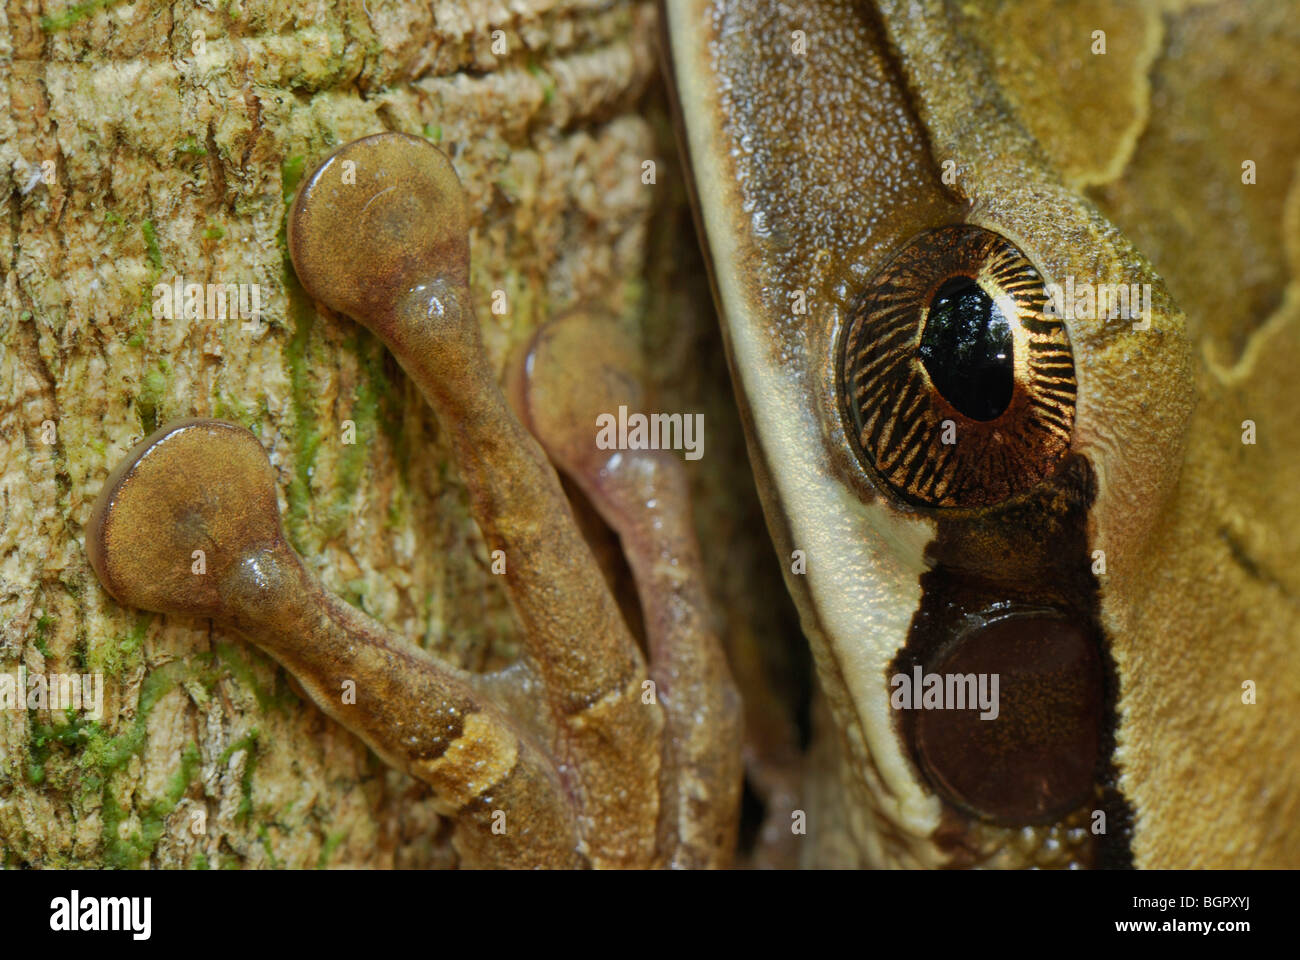 Rocket Treefrog (Hypsiboas Lanciformis), Fuß mit Toe Pads und Auge, Allpahuayo Mishana Nationalreservat, Iquitos, Peru Stockfoto